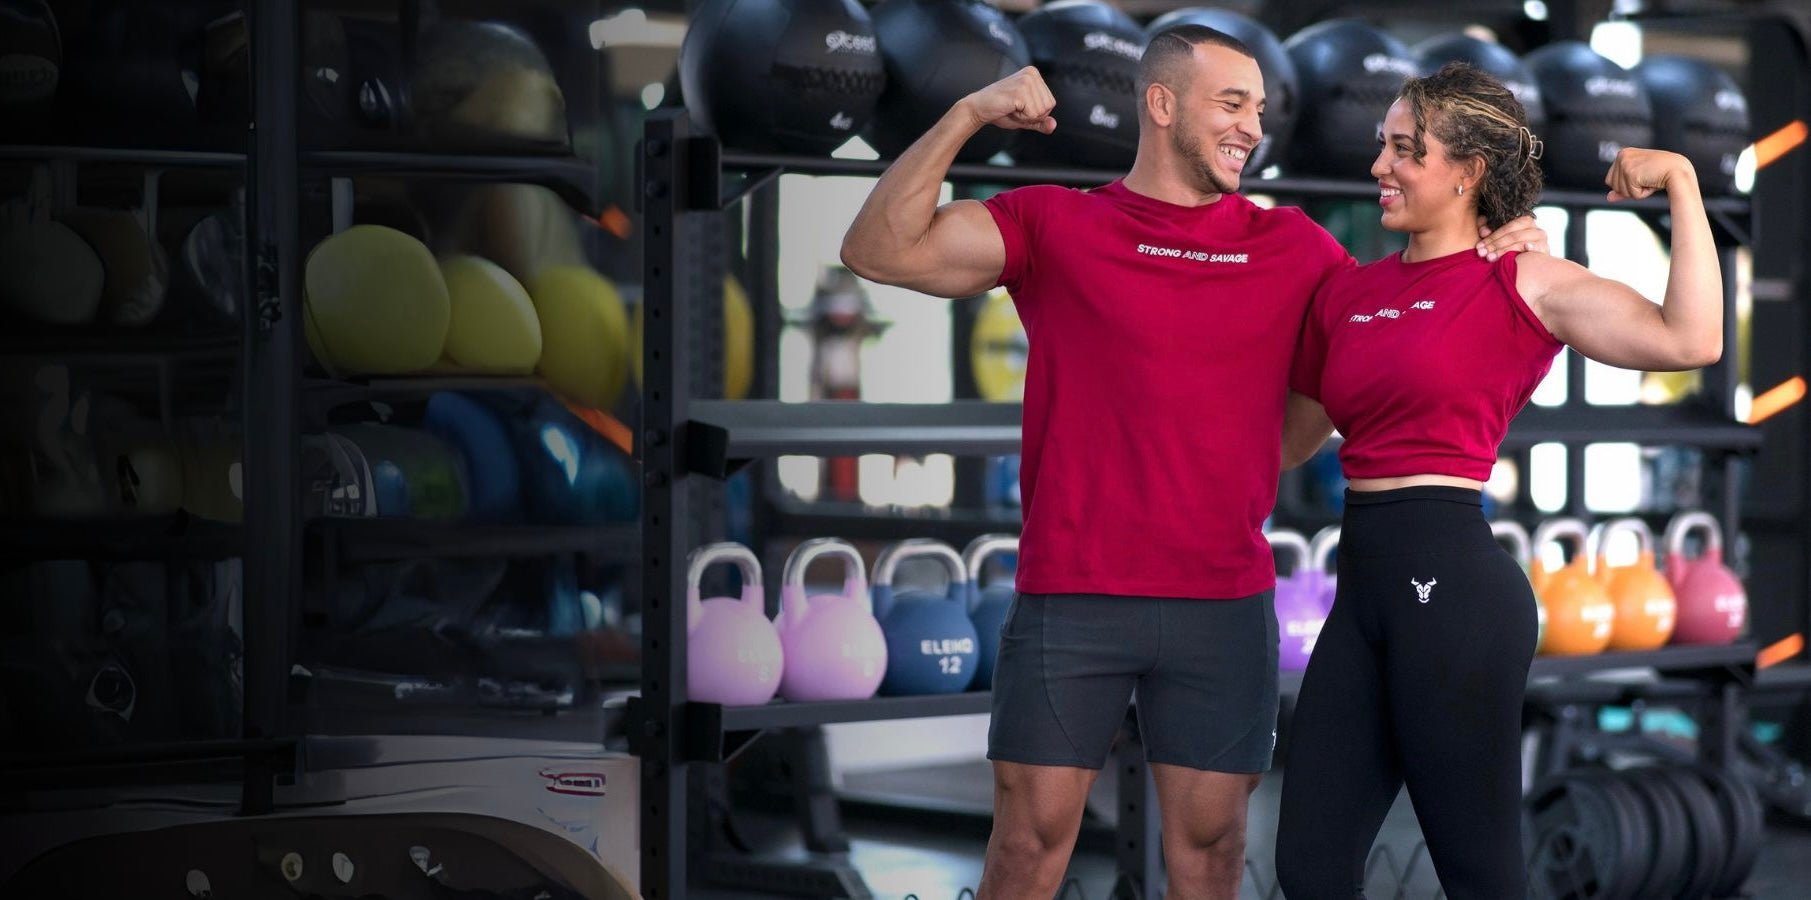 Gym wear Outlet cheap Workout clothes for men women